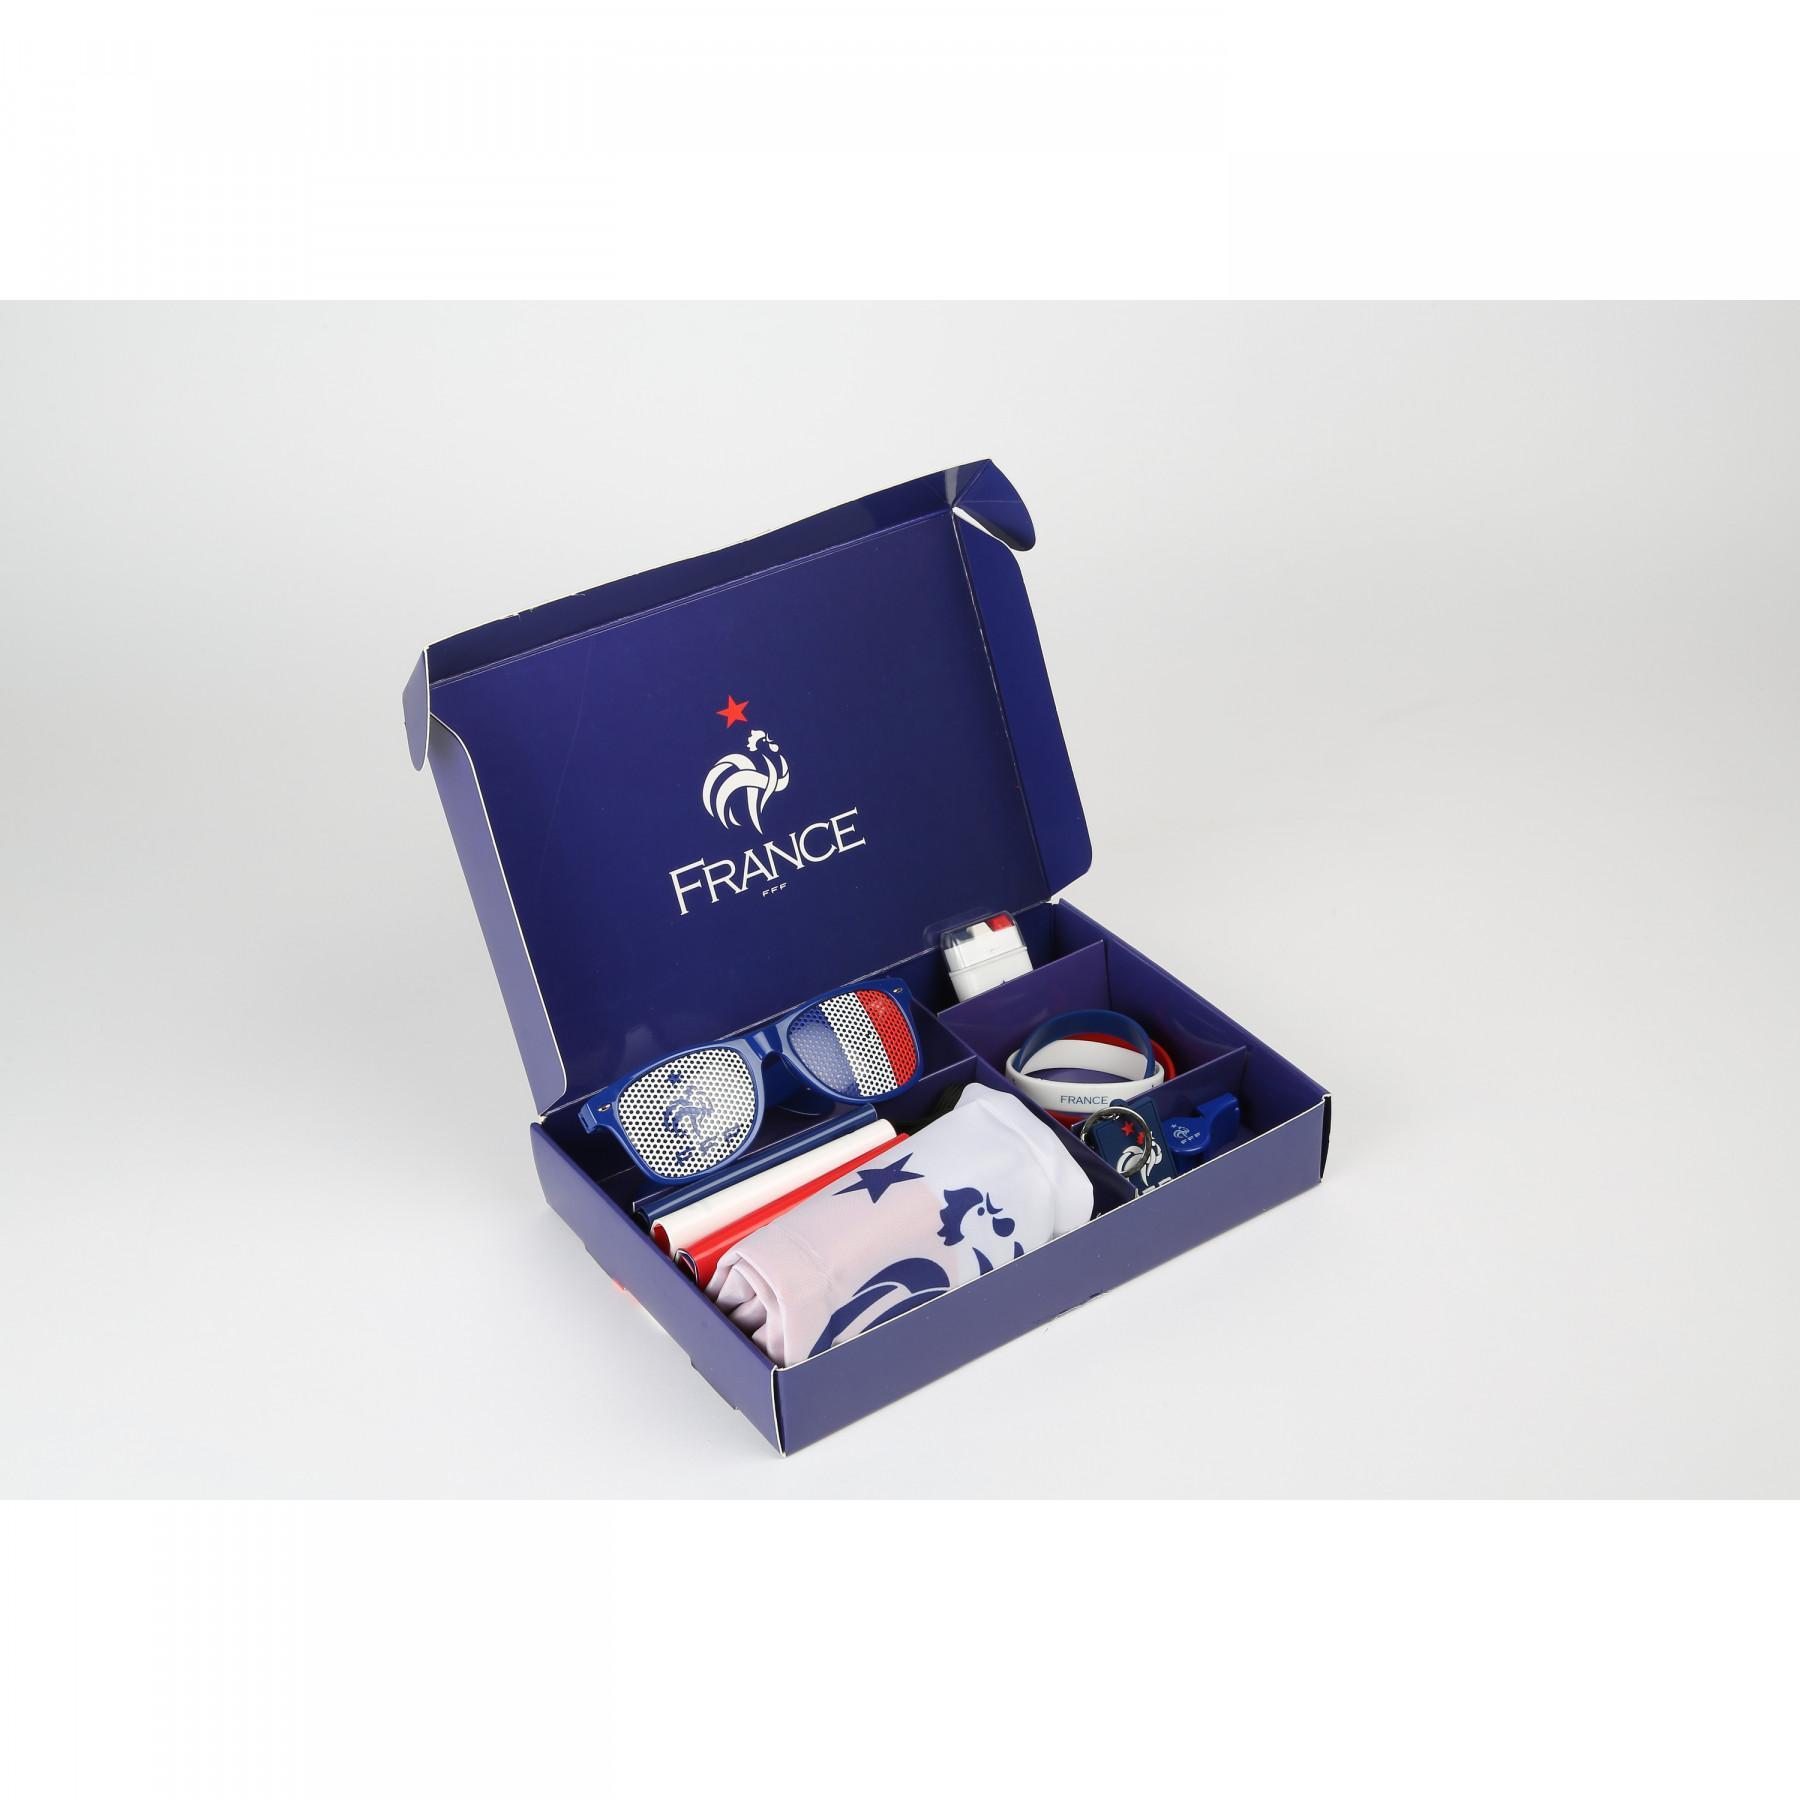 Kit sostenitore FFF Euro 2016 officiel